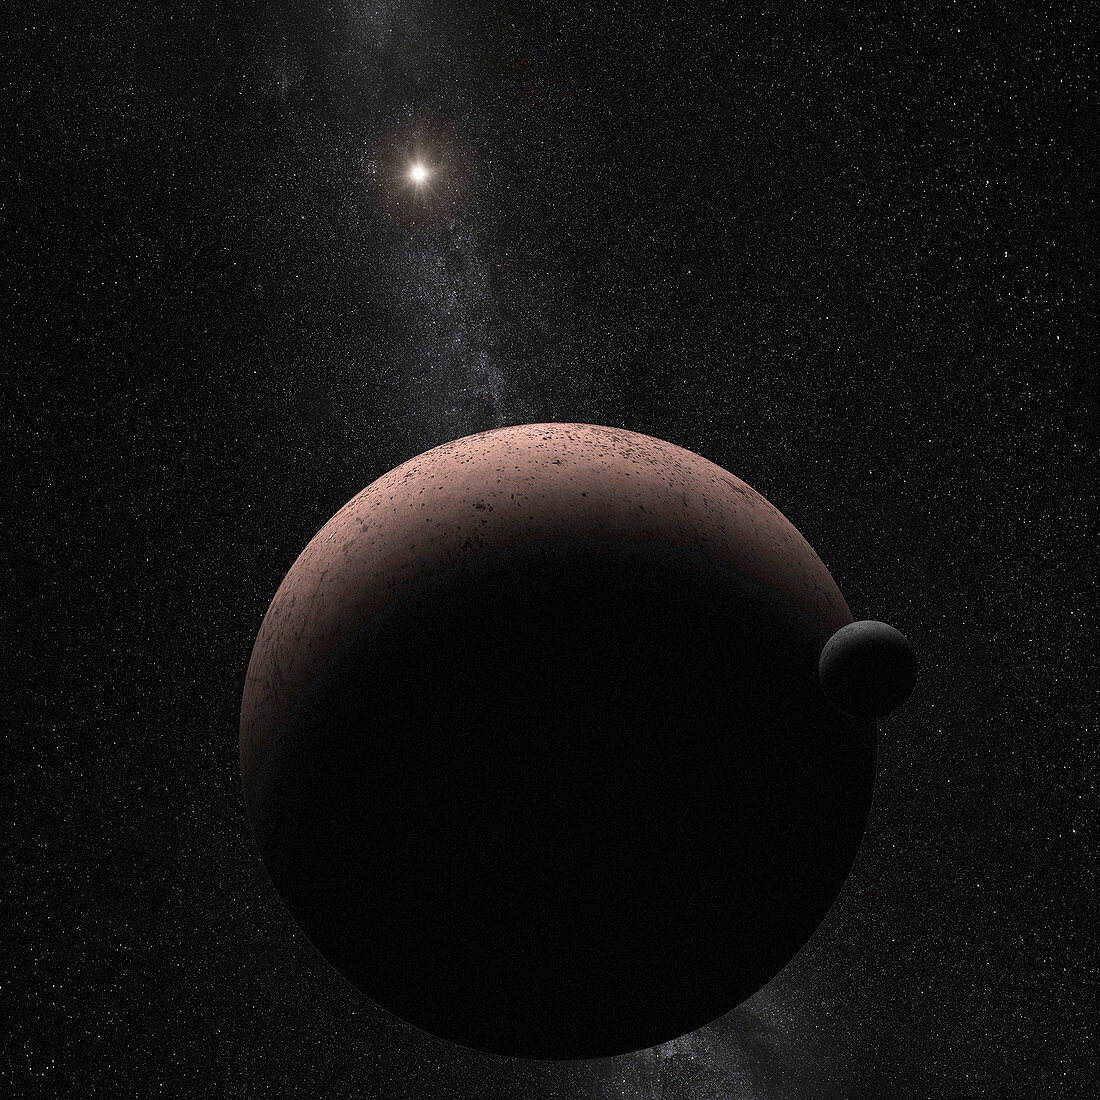 Dwarf planet Makemake with orbiting moon, illustration